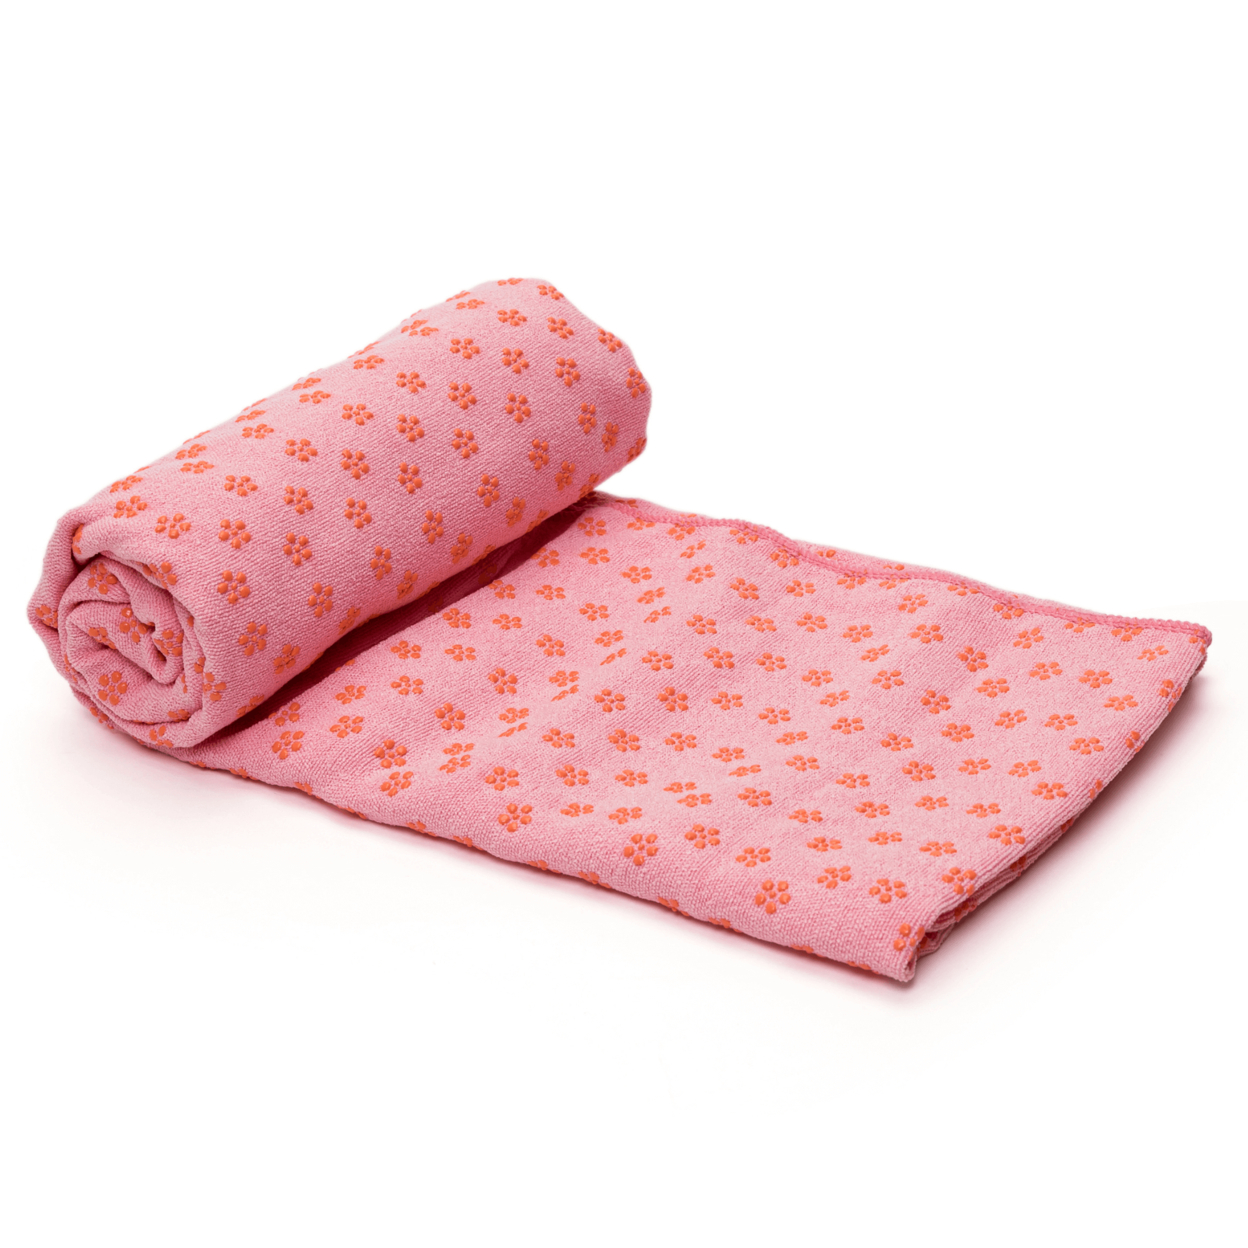 Premium Absorption Hot Yoga Mat Towel With Slip-Resistant Grip Dots - Dark Blue